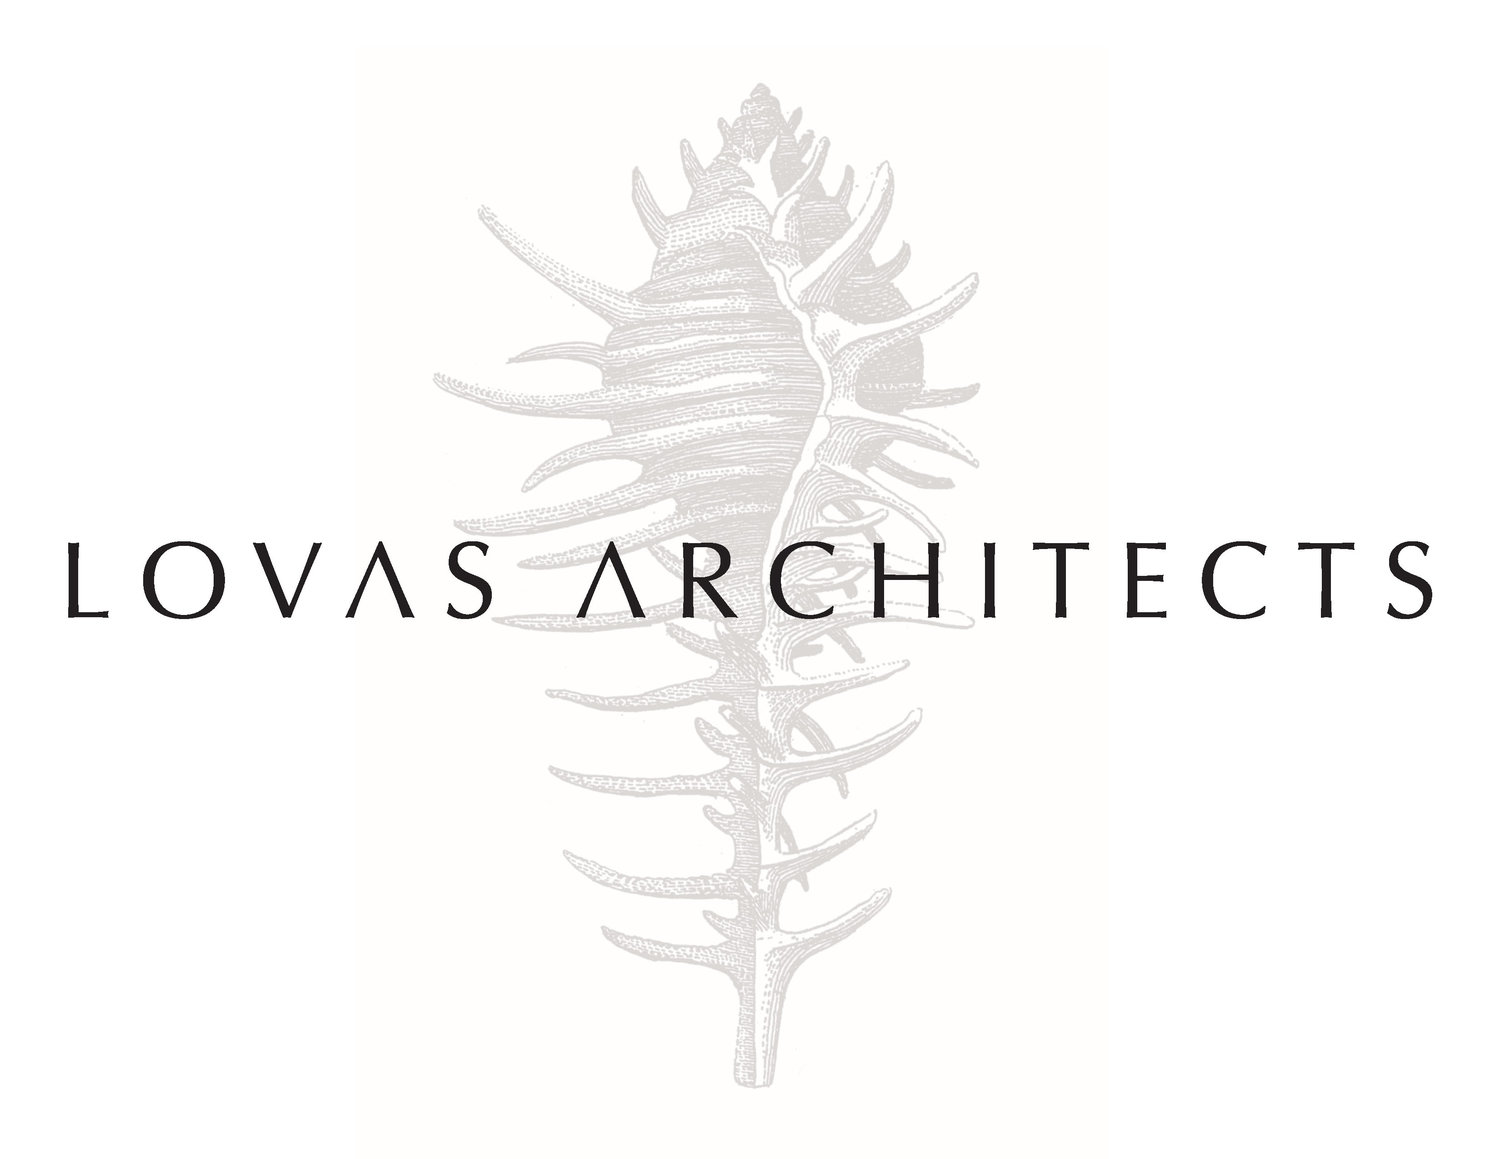 LOVAS ARCHITECTS, LLC